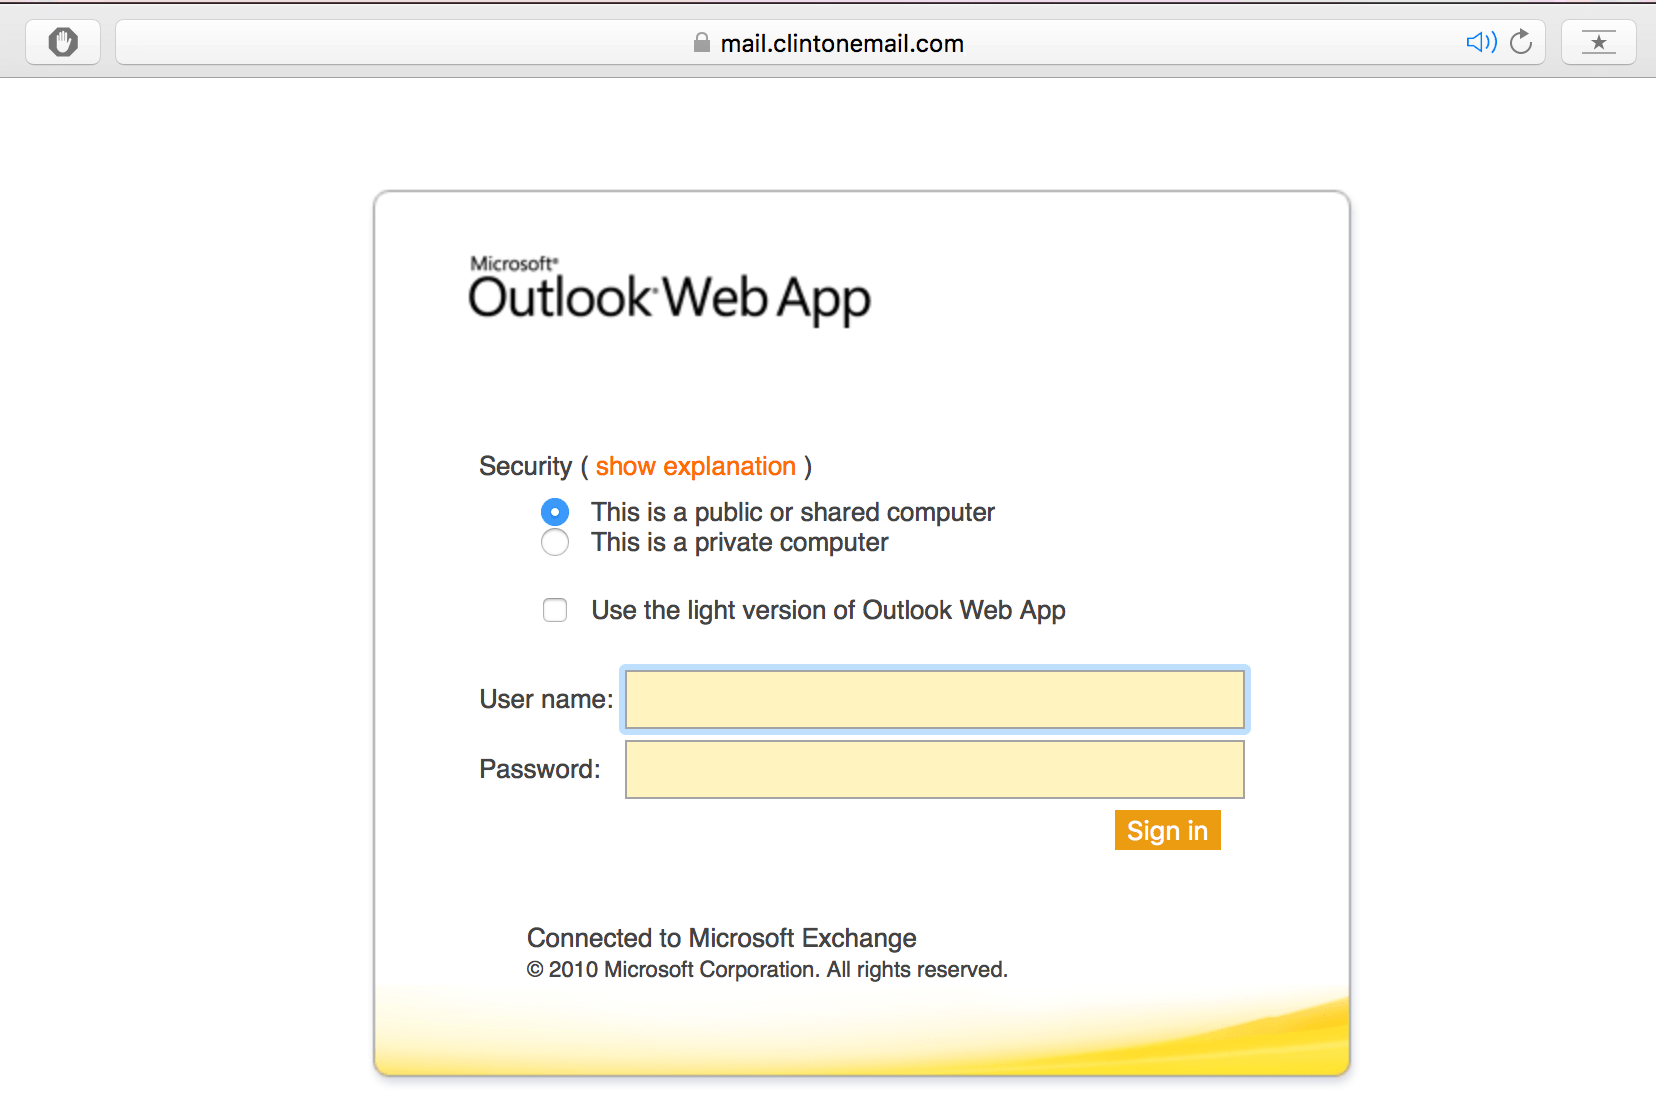 Logon aspx url. Owa Outlook почта. Почта Outlook web app. Outlook web app owa. Outlook web access.